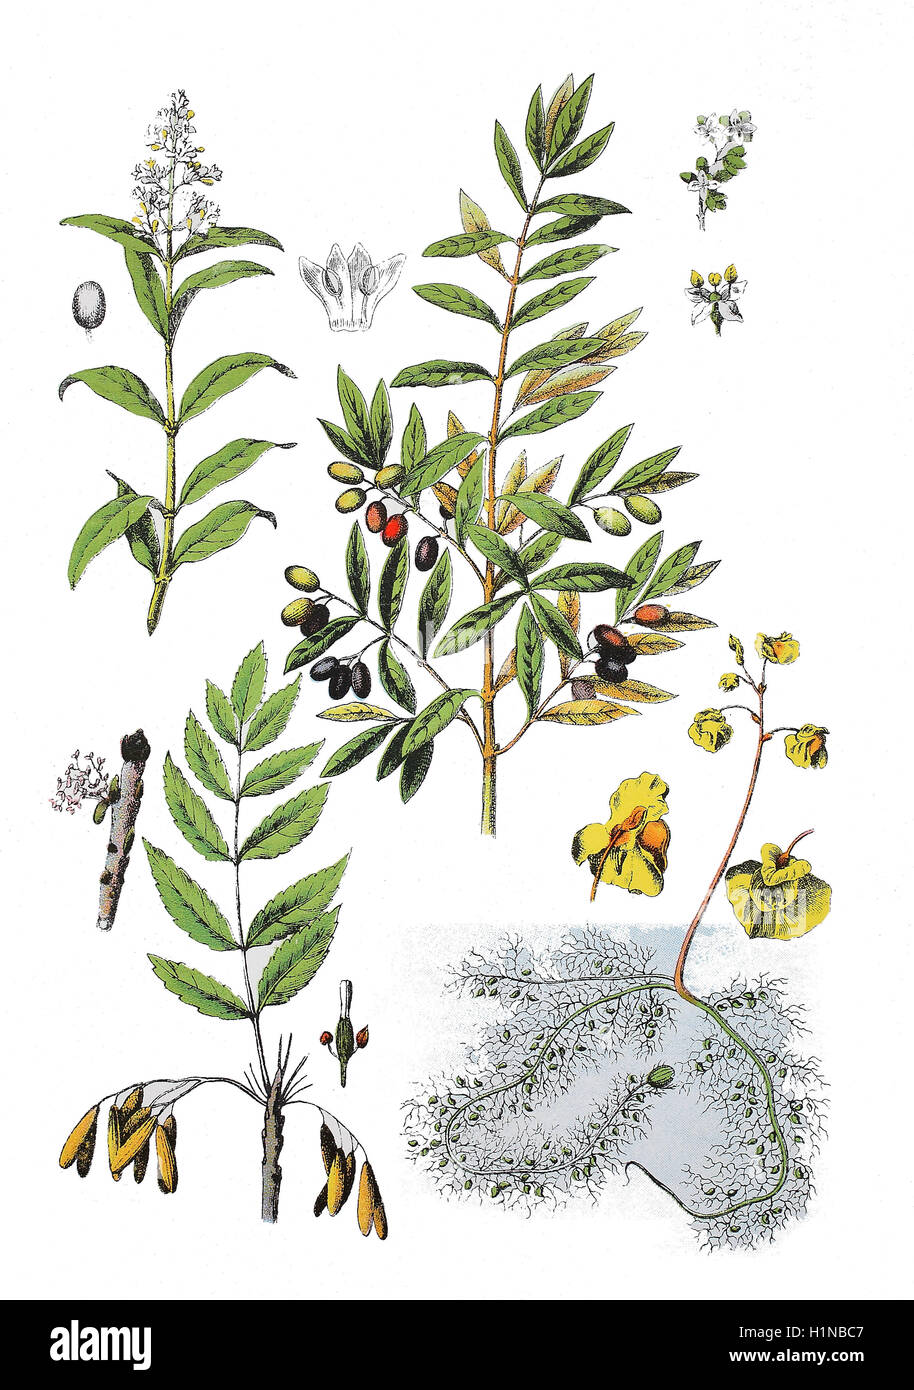 wild privet, Ligustrum vulgare (top left), olive, Olea europaea (top right), European ash, Fraxinus excelsior (bottem left), greater bladderwort, Utricularia vulgaris (bottem right) Stock Photo